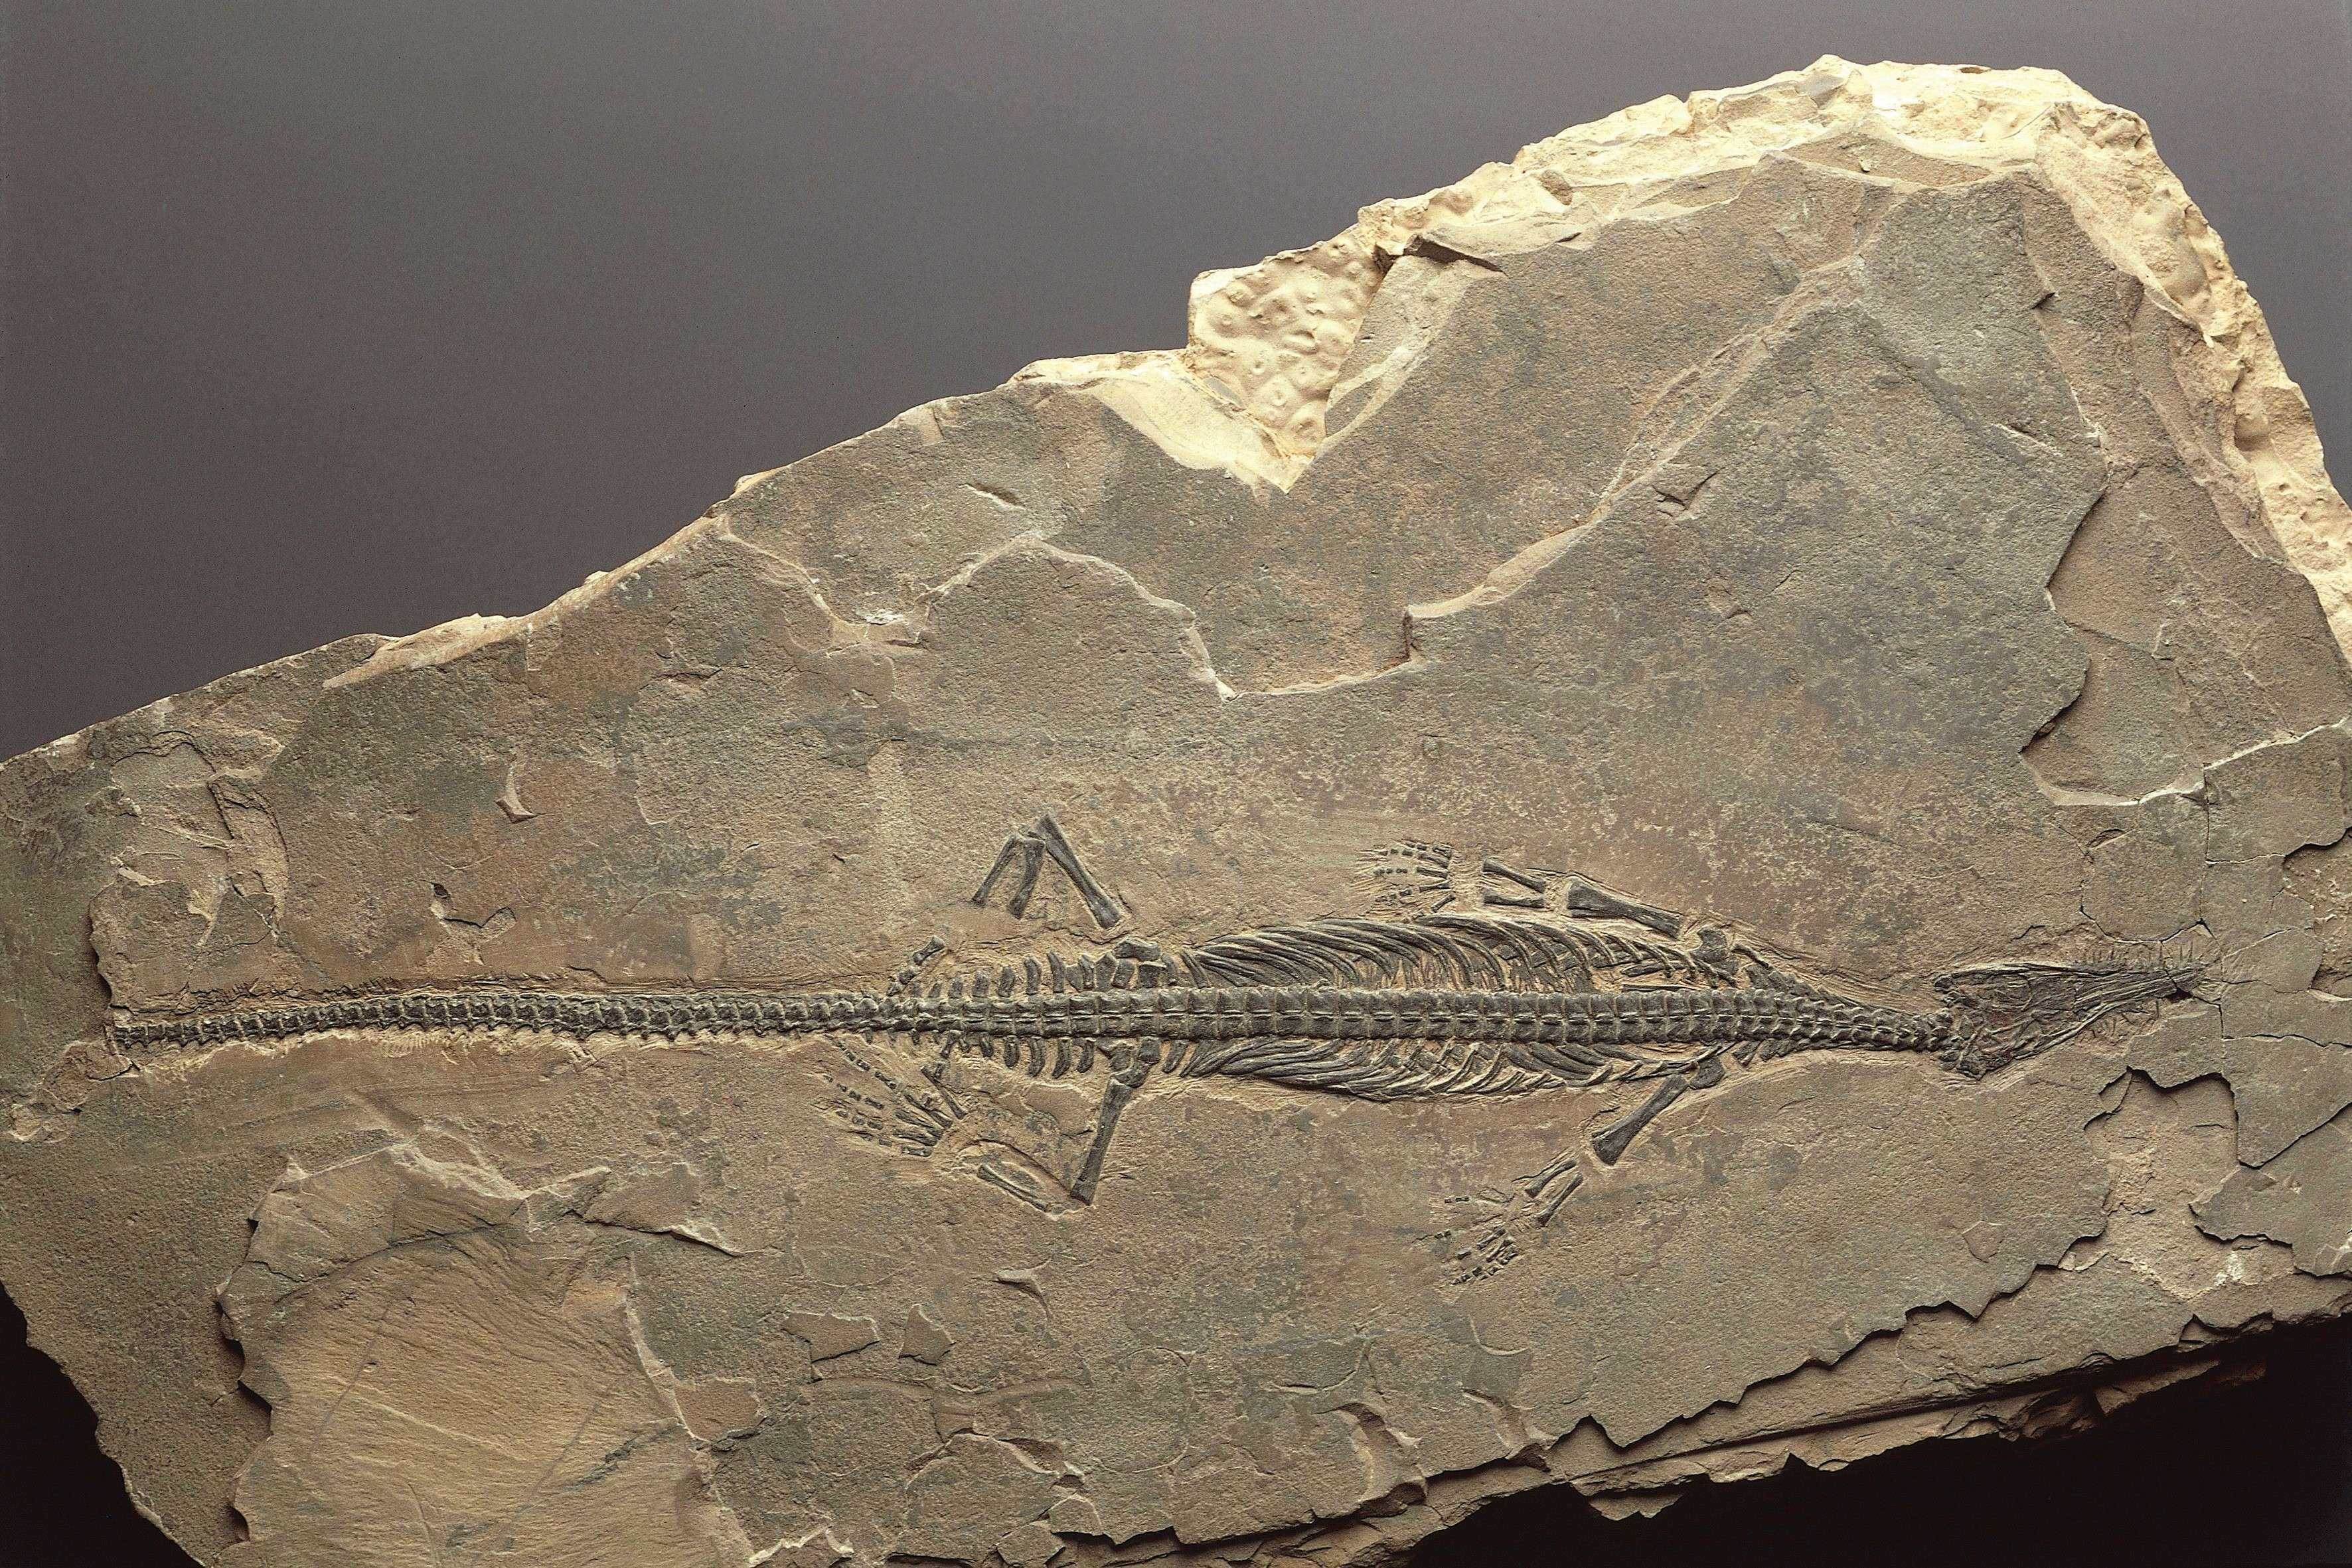  Fossilized Mesosaurus brasiliensis